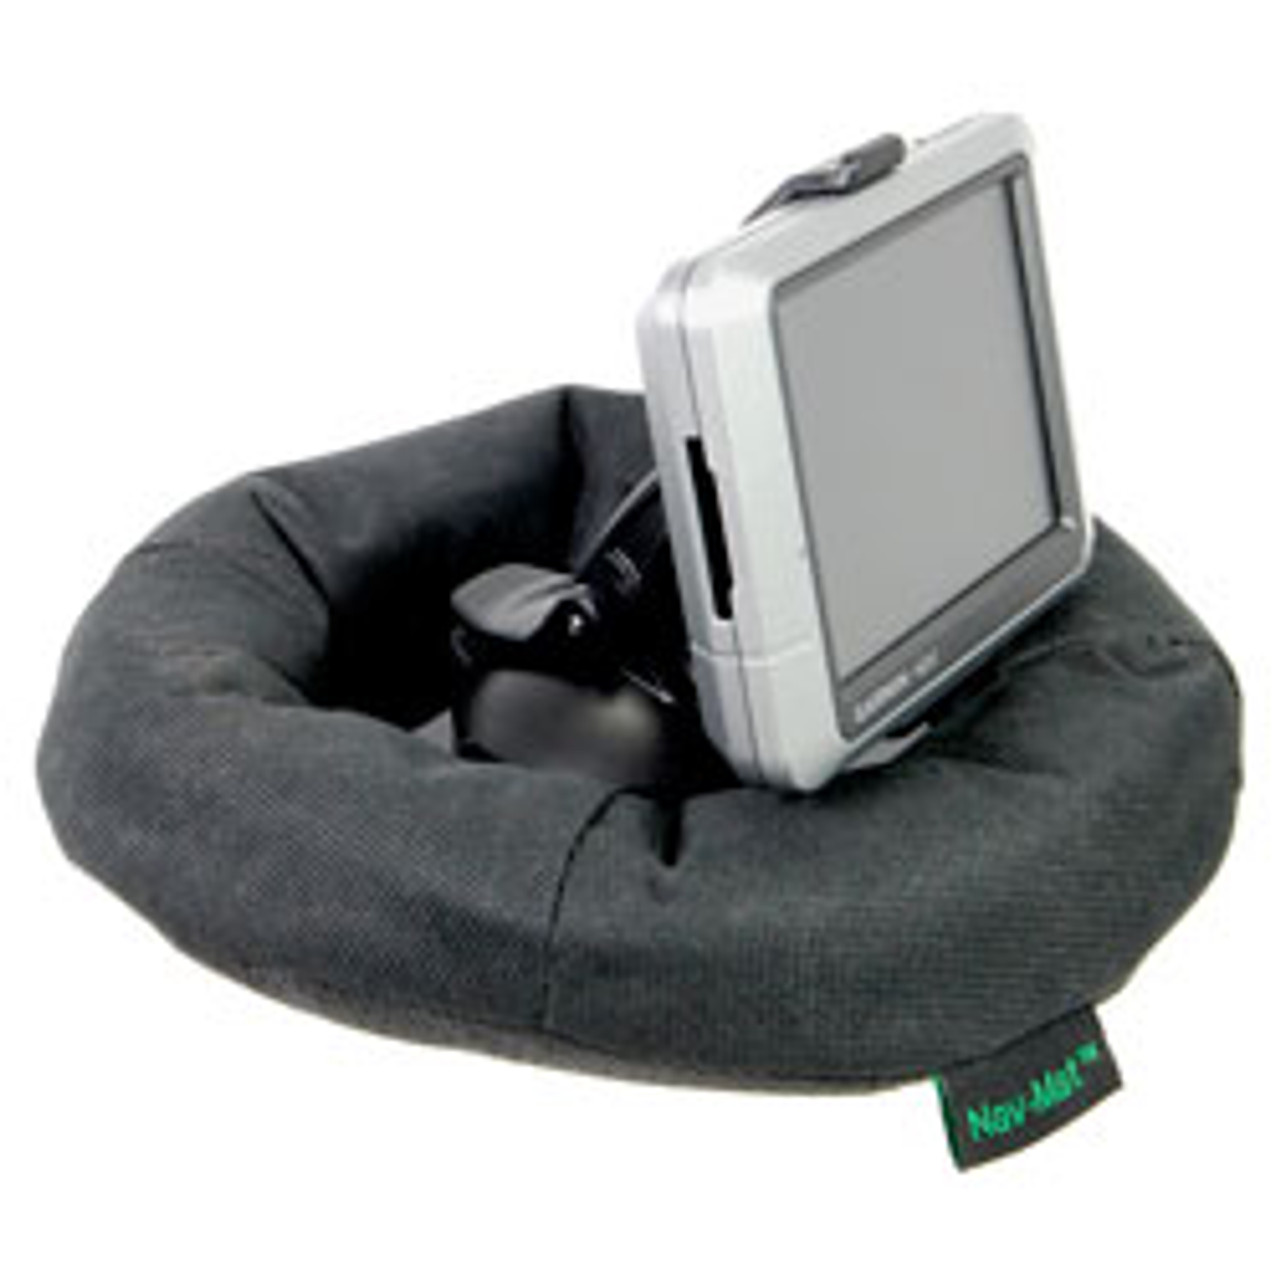 Bracketron - GPS Nav-Pack Weighted Portable Dash Mount